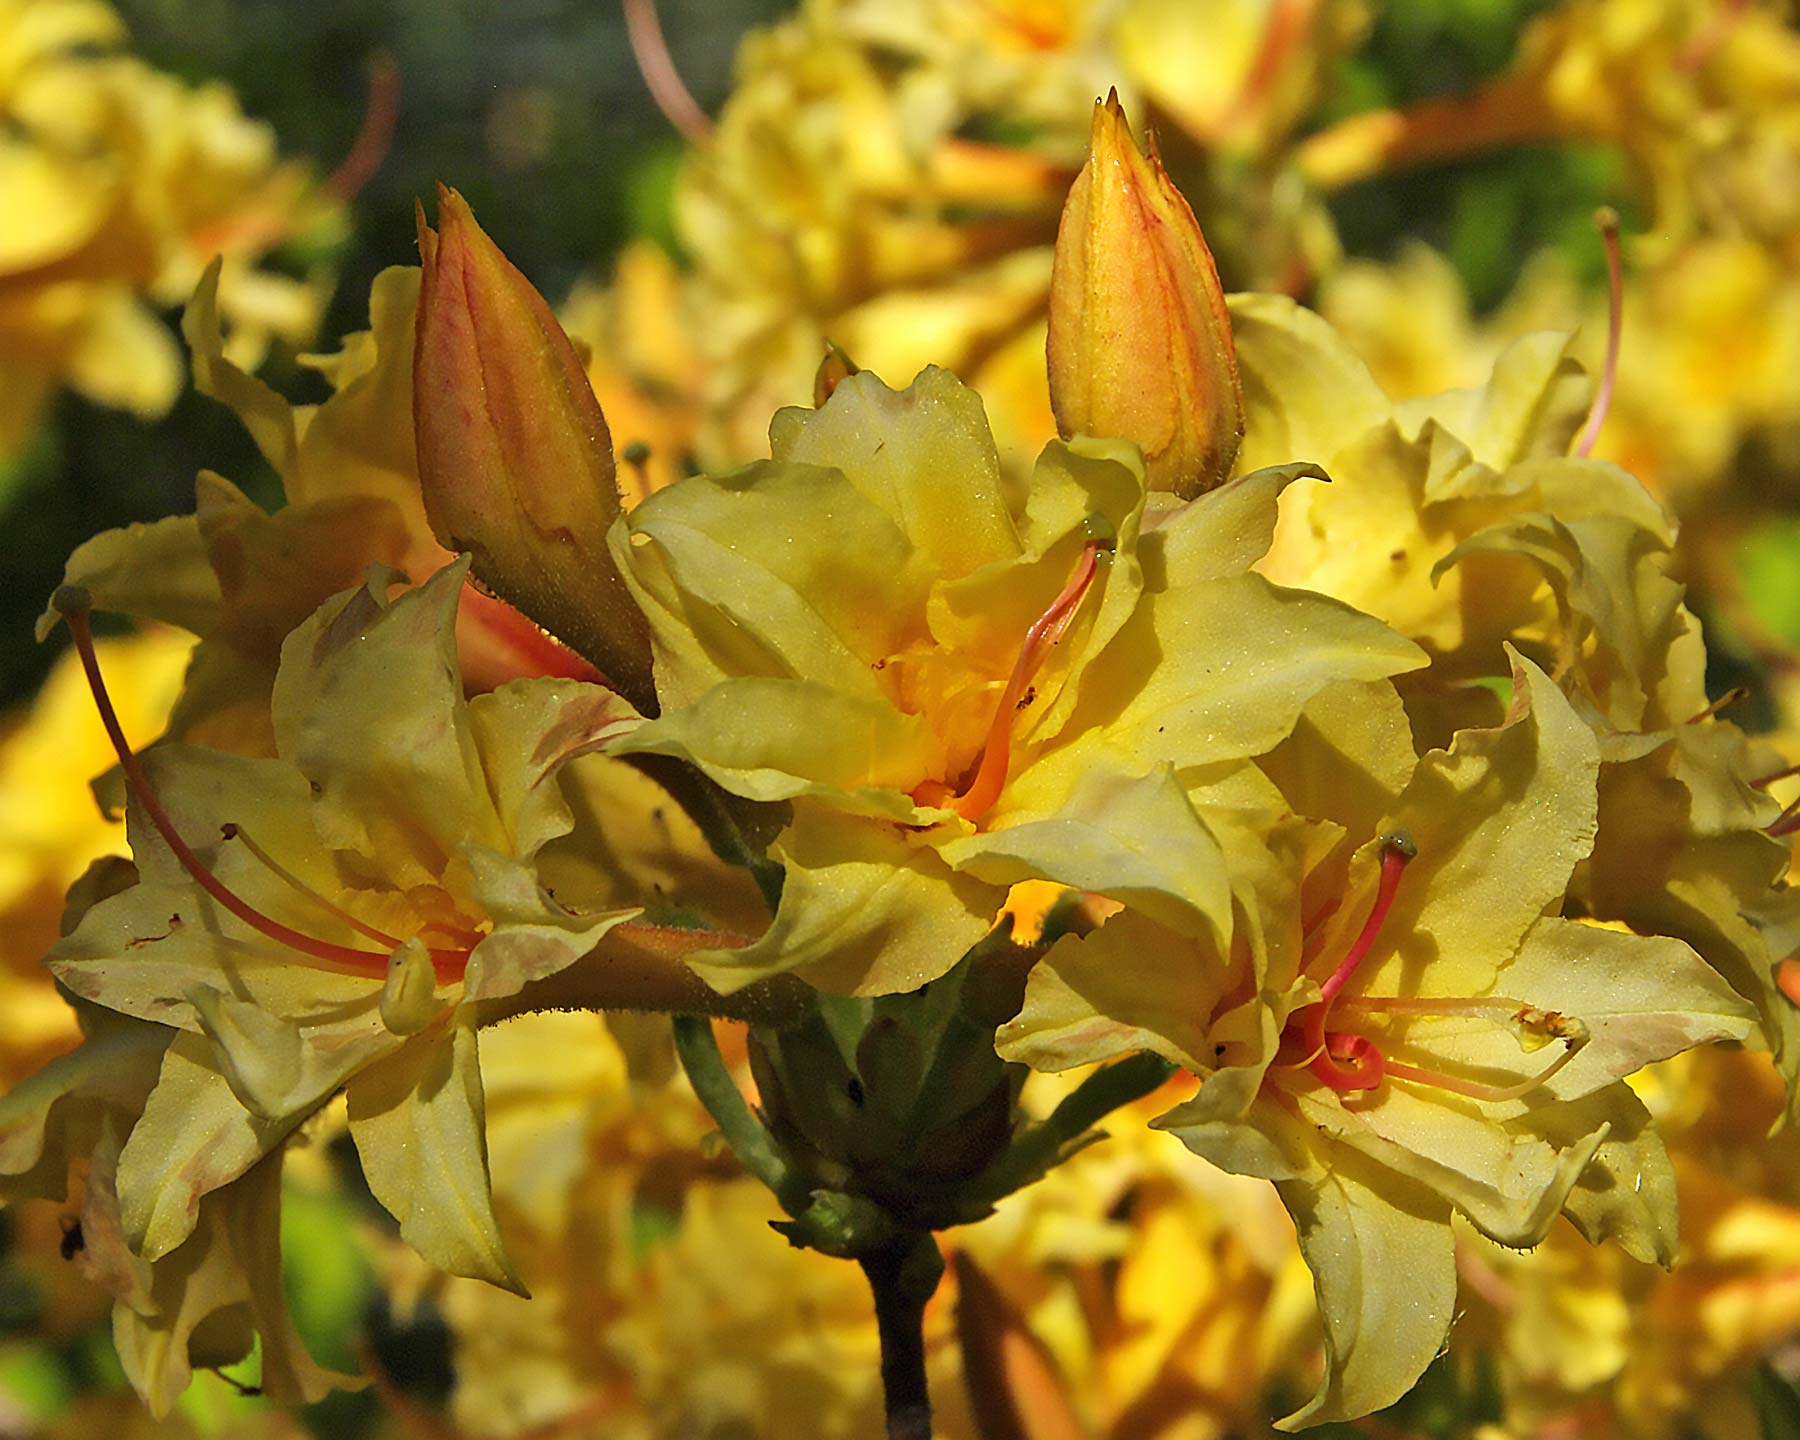 Rhododendron Mollis Yellow